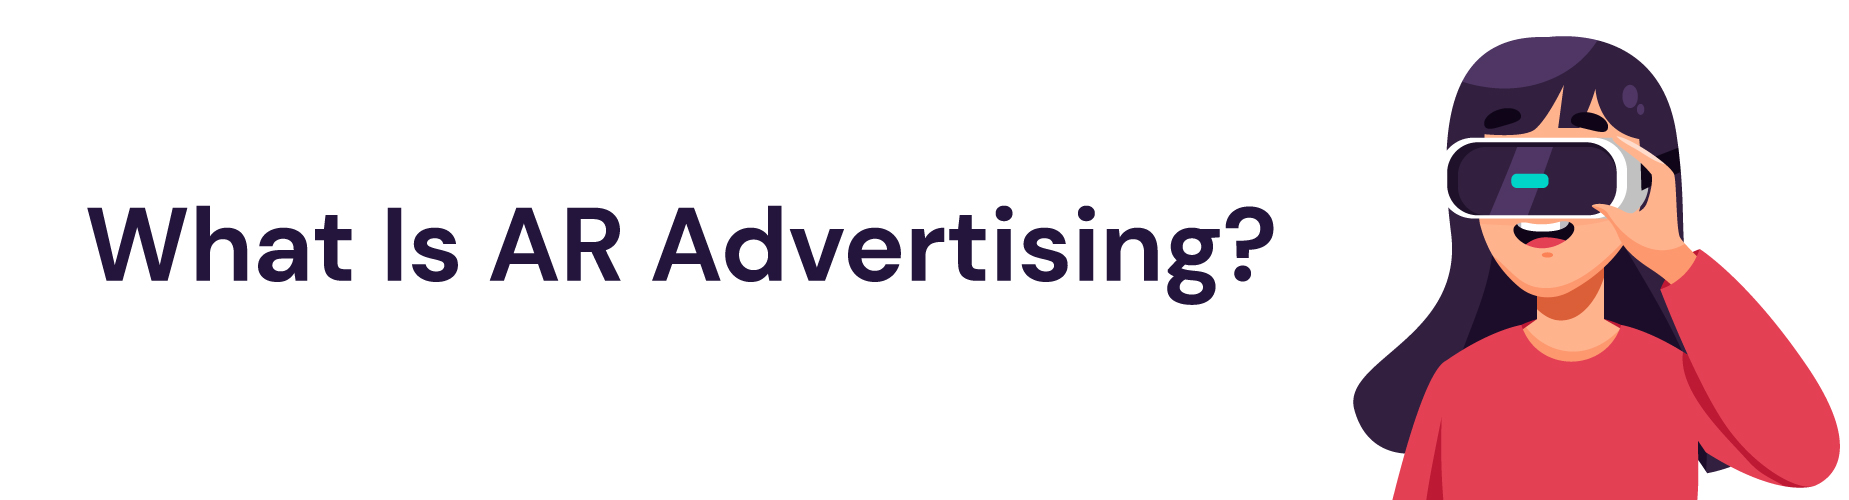 AR Advertising definition 